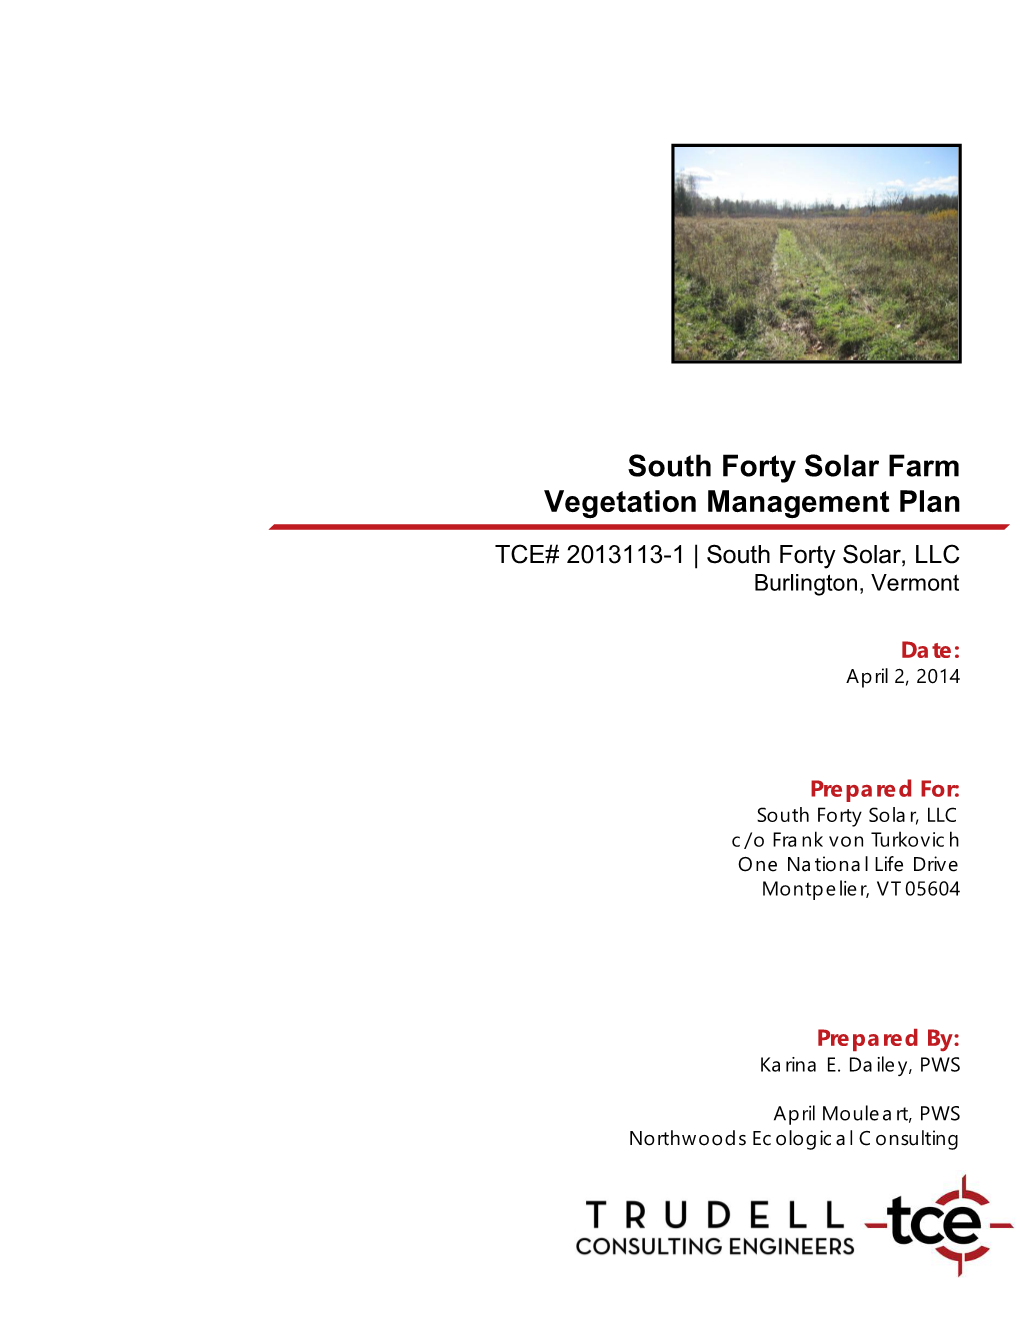 South Forty Solar Farm Vegetation Management Plan